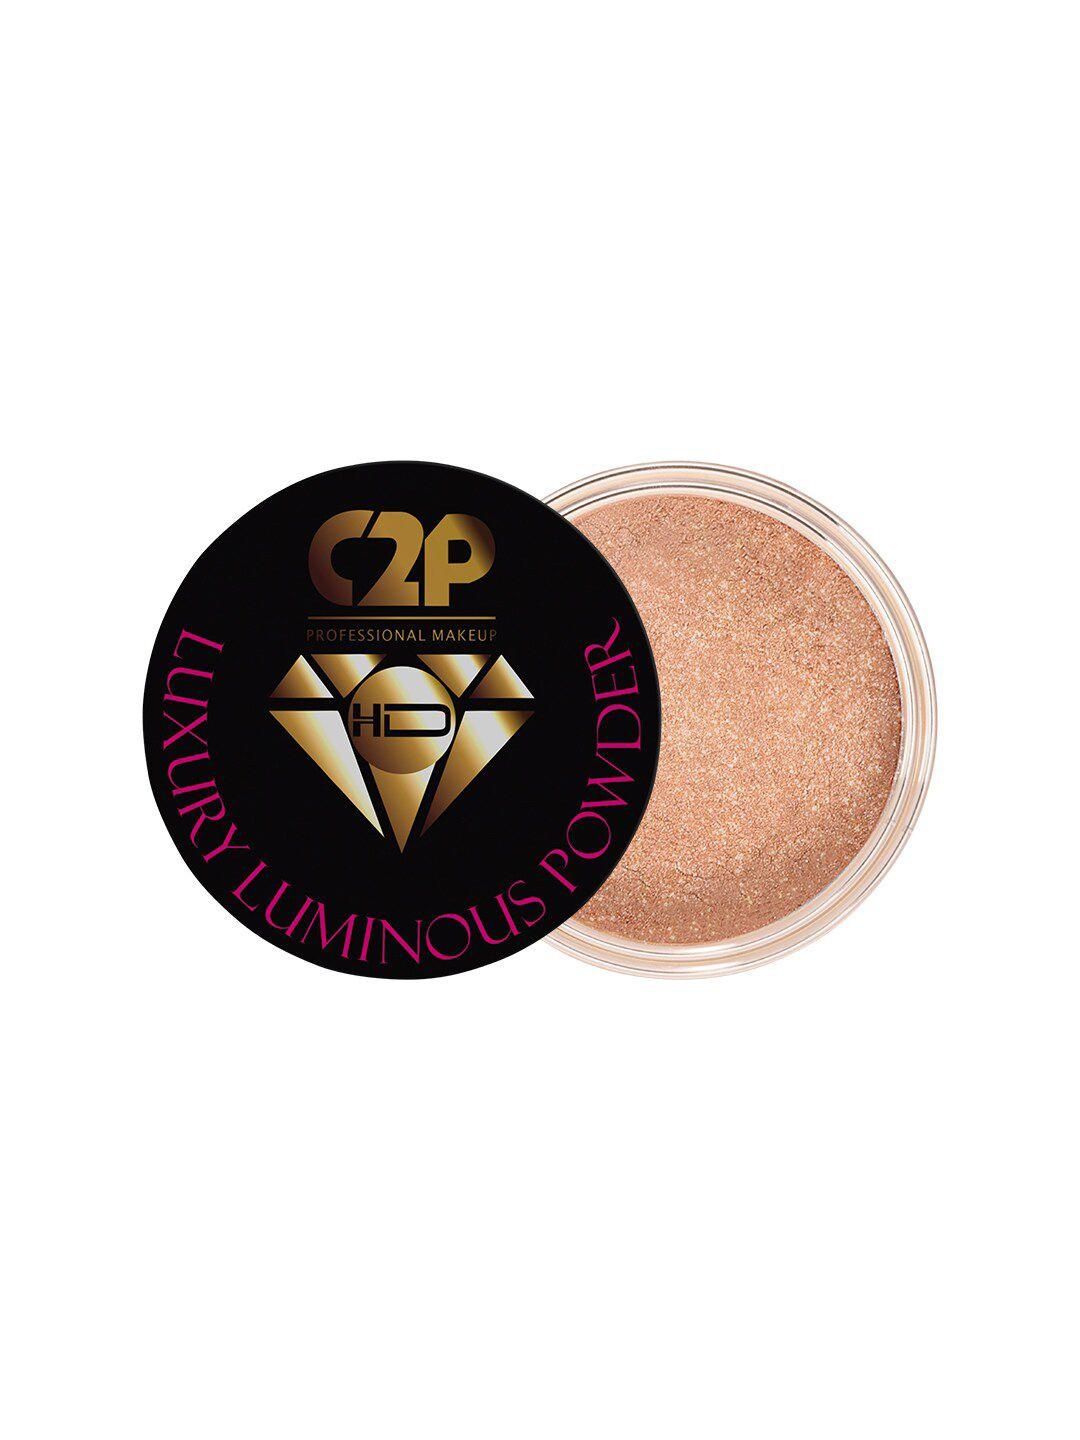 c2p-professional-makeup-hd-luxury-luminous-shimmer-powder---natural-01